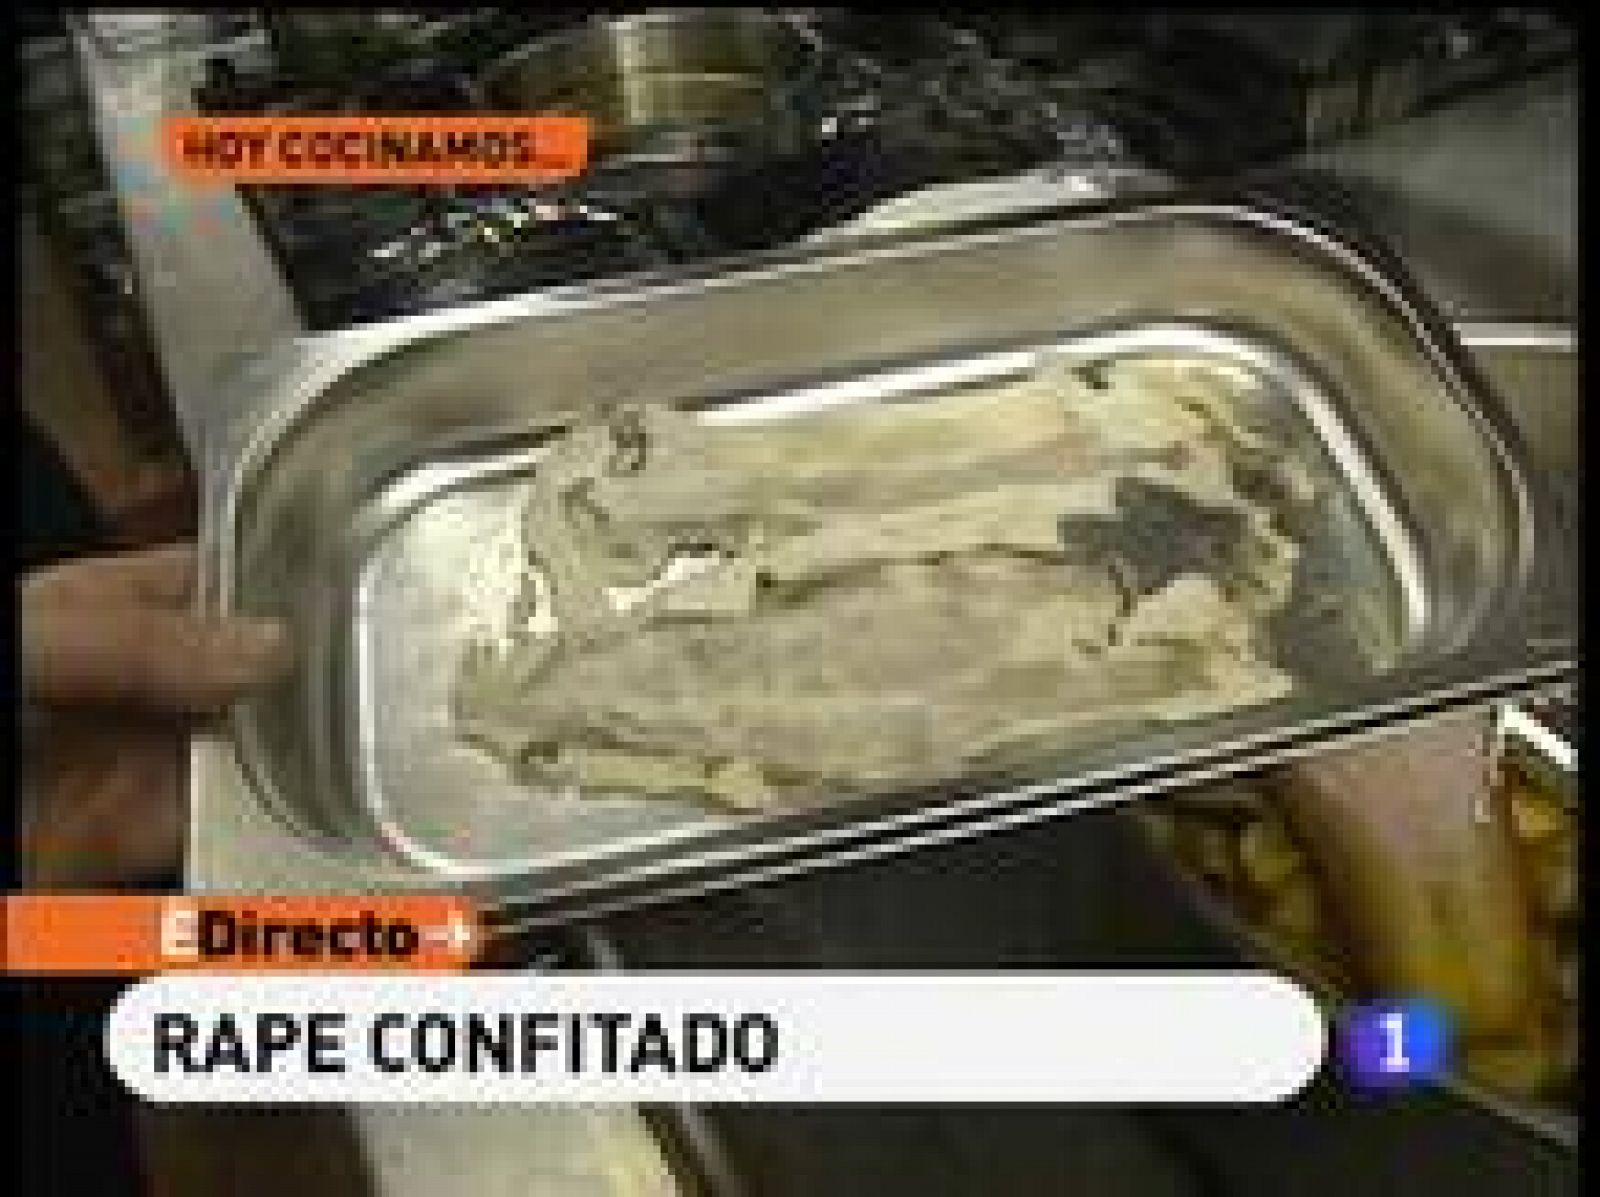 RTVE Cocina: Rape confitado | RTVE Play